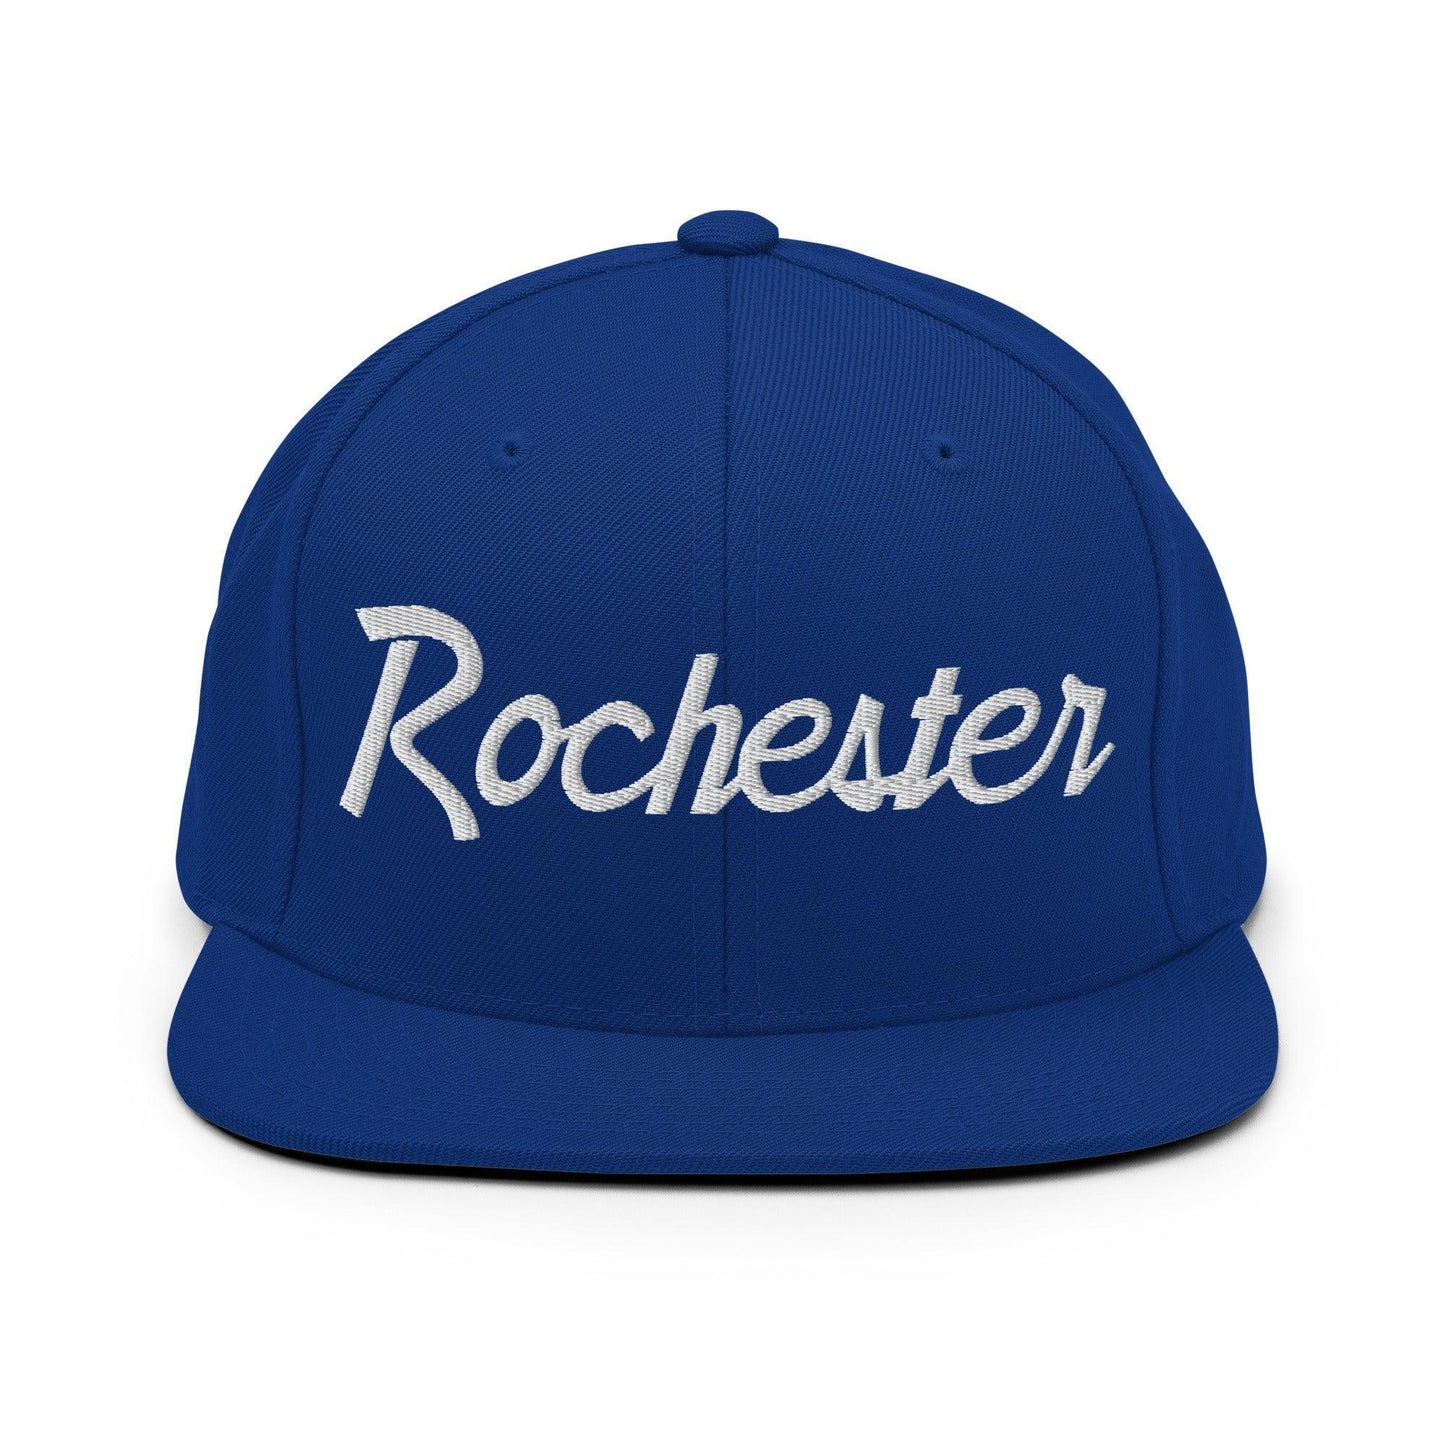 Rochester Script Snapback Hat Royal Blue